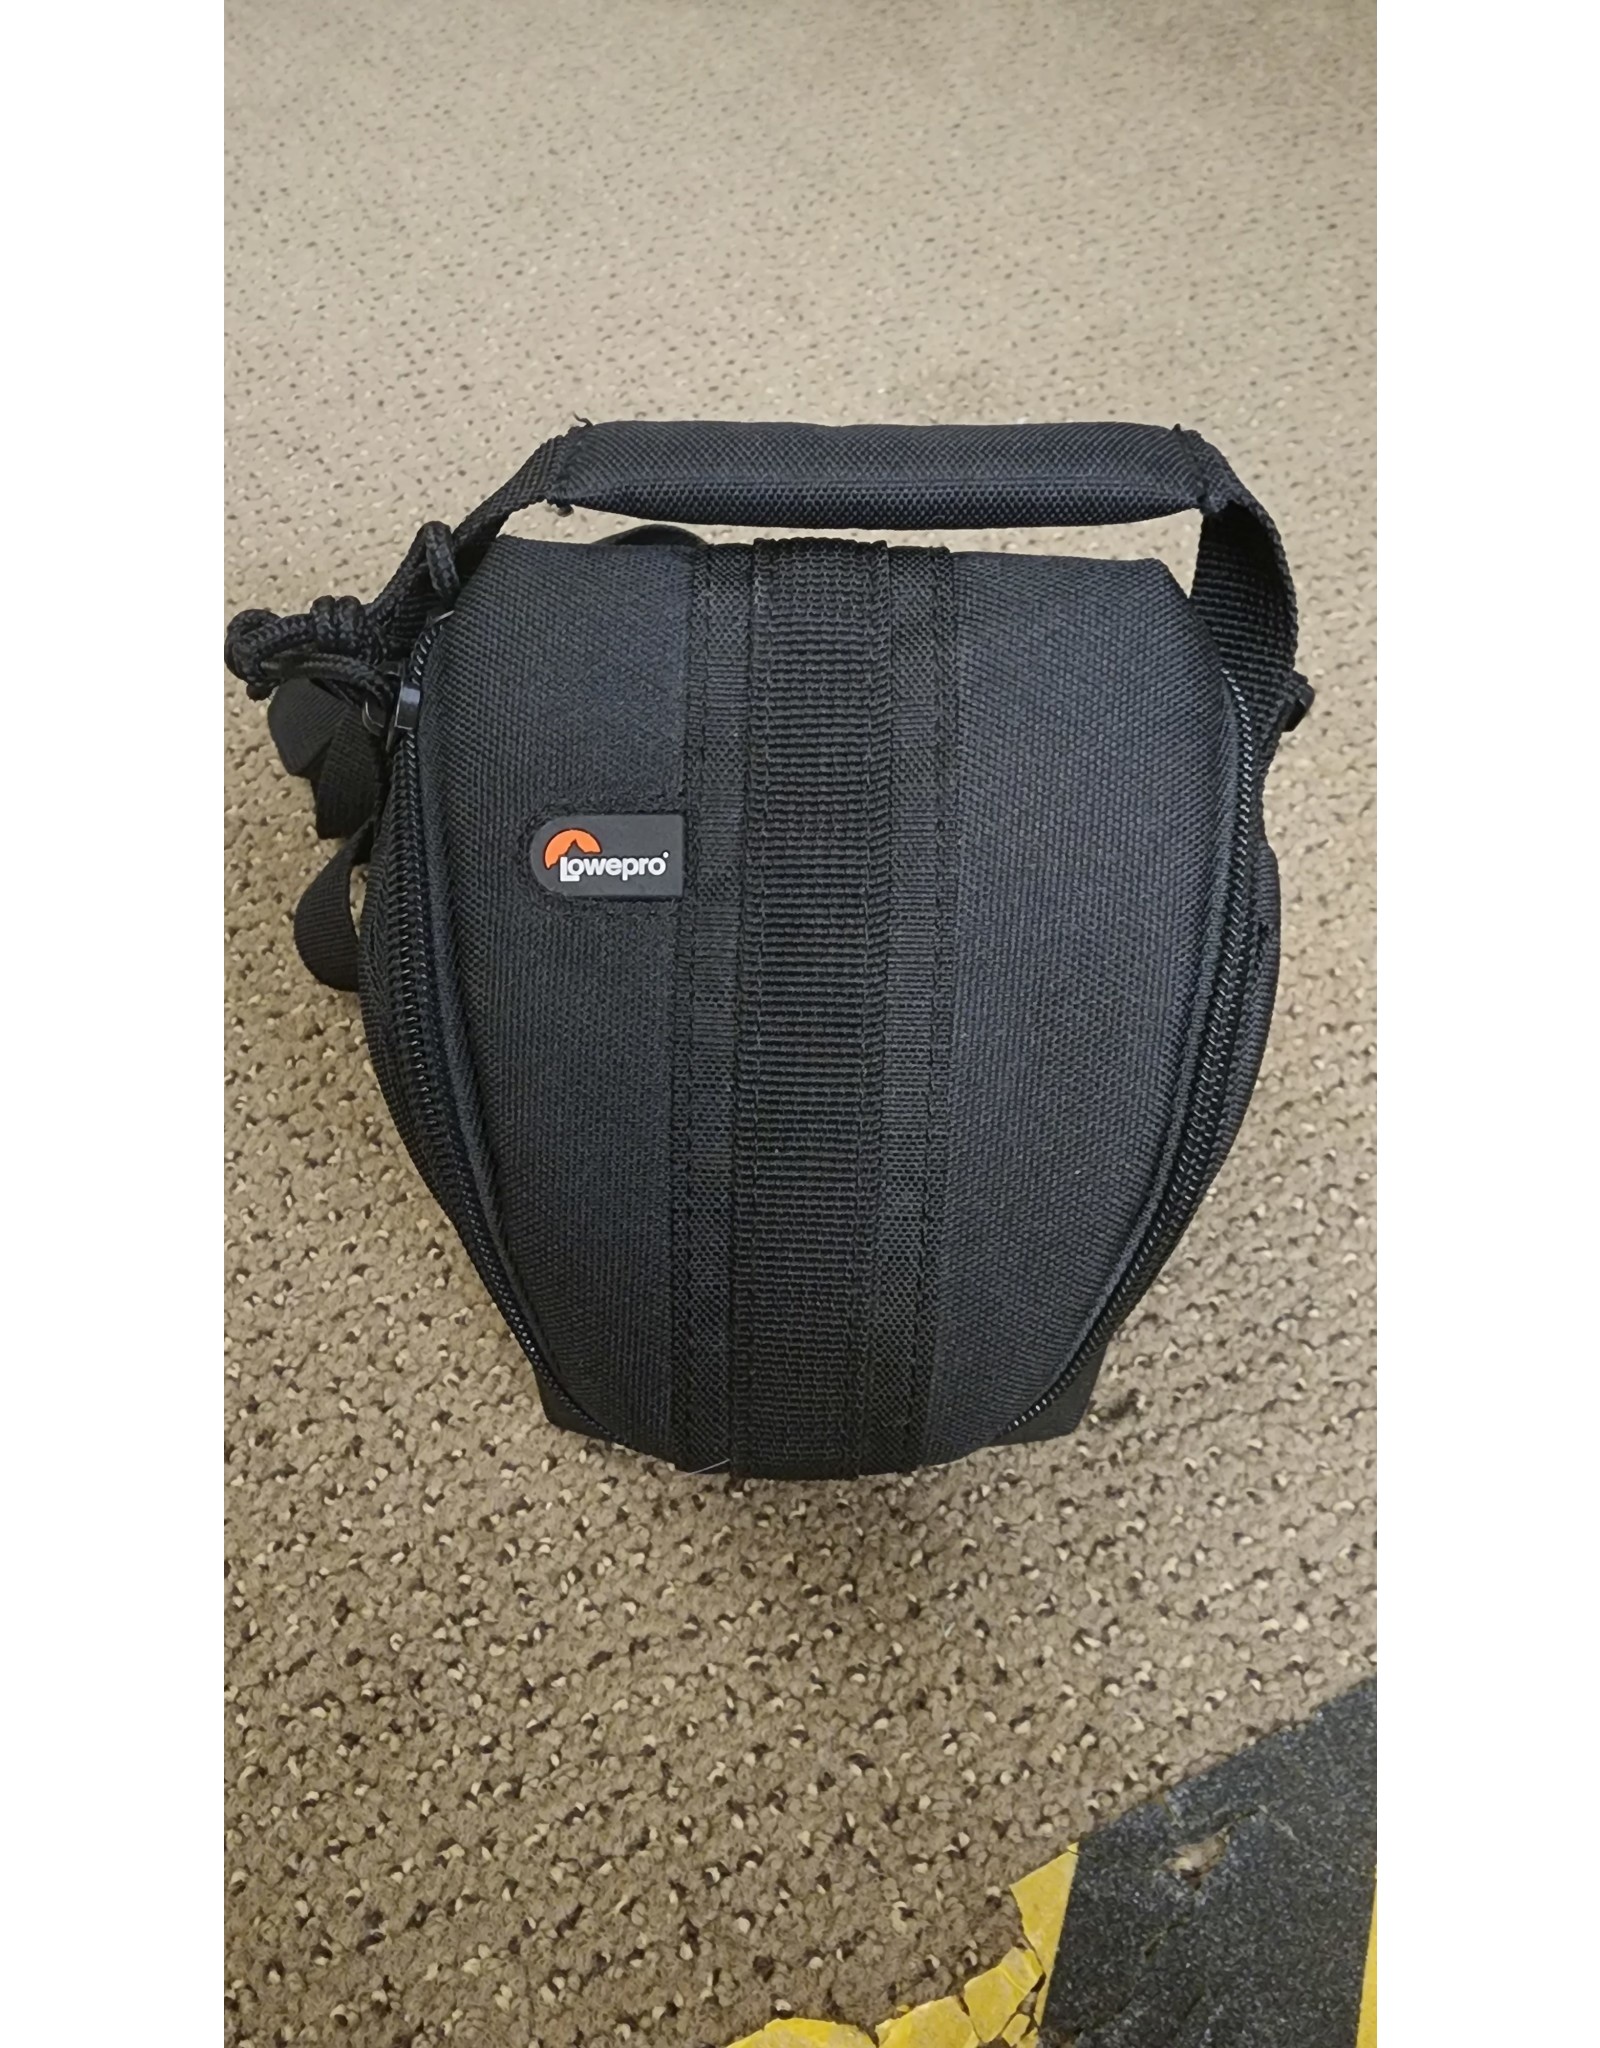 LowePro LowePro Nova MIcro Camera Bag Case w/ Shoulder Strap Adventura ultrazoom 100